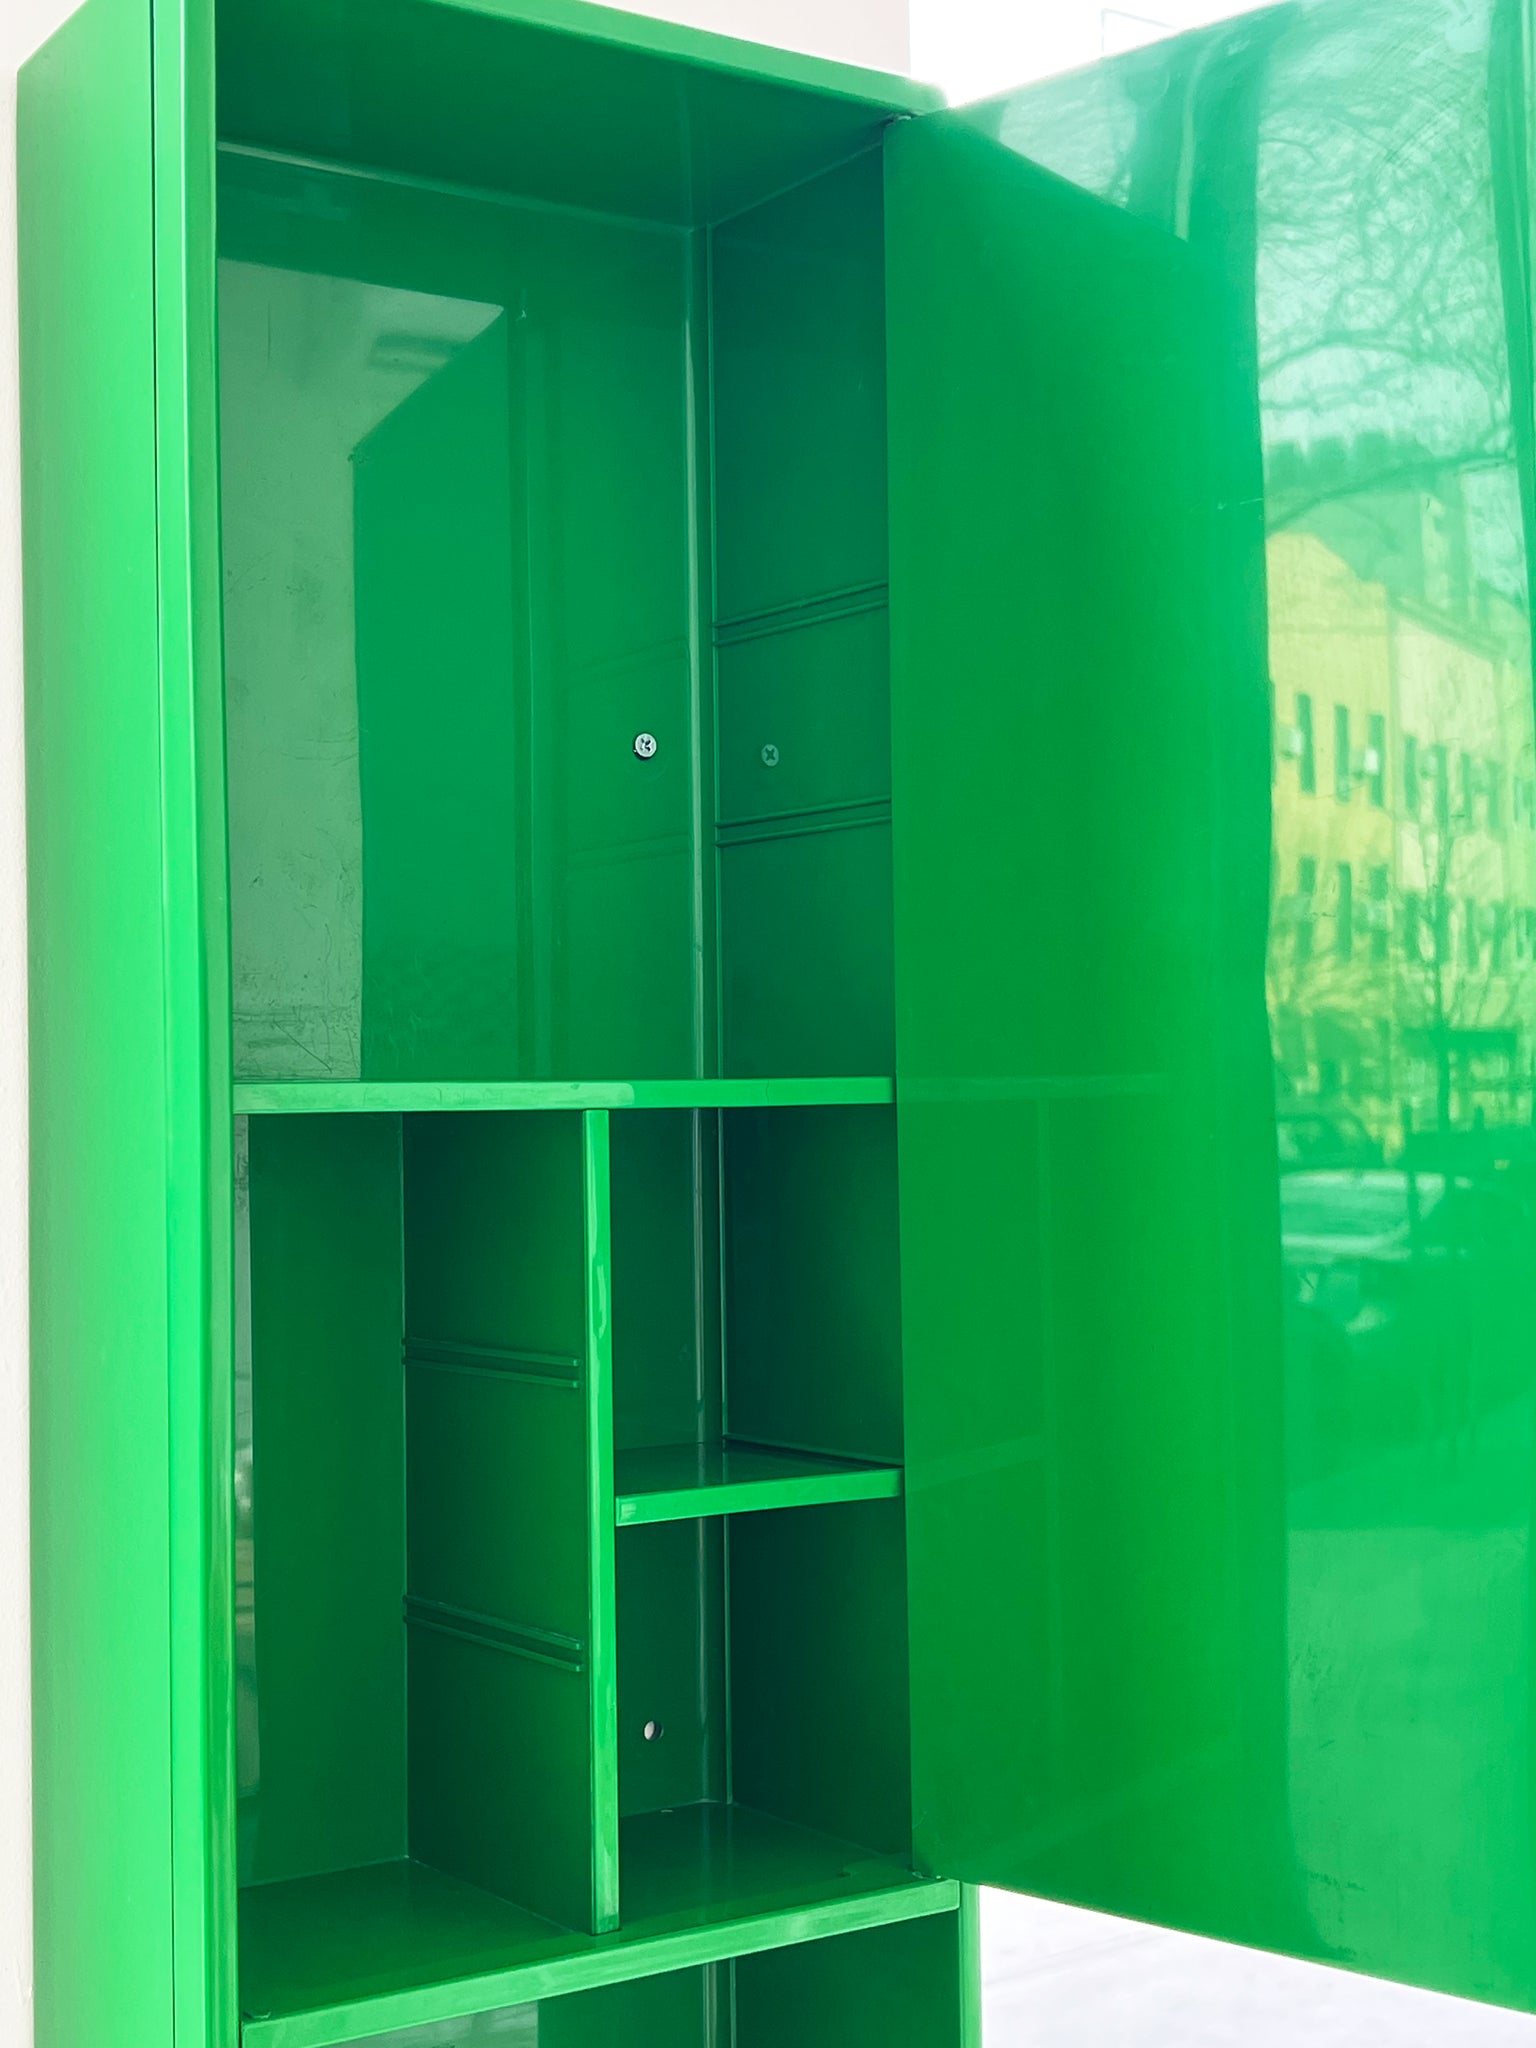 1970s Green Medicine Cabinet by Olaf Von Bohr for Gedy